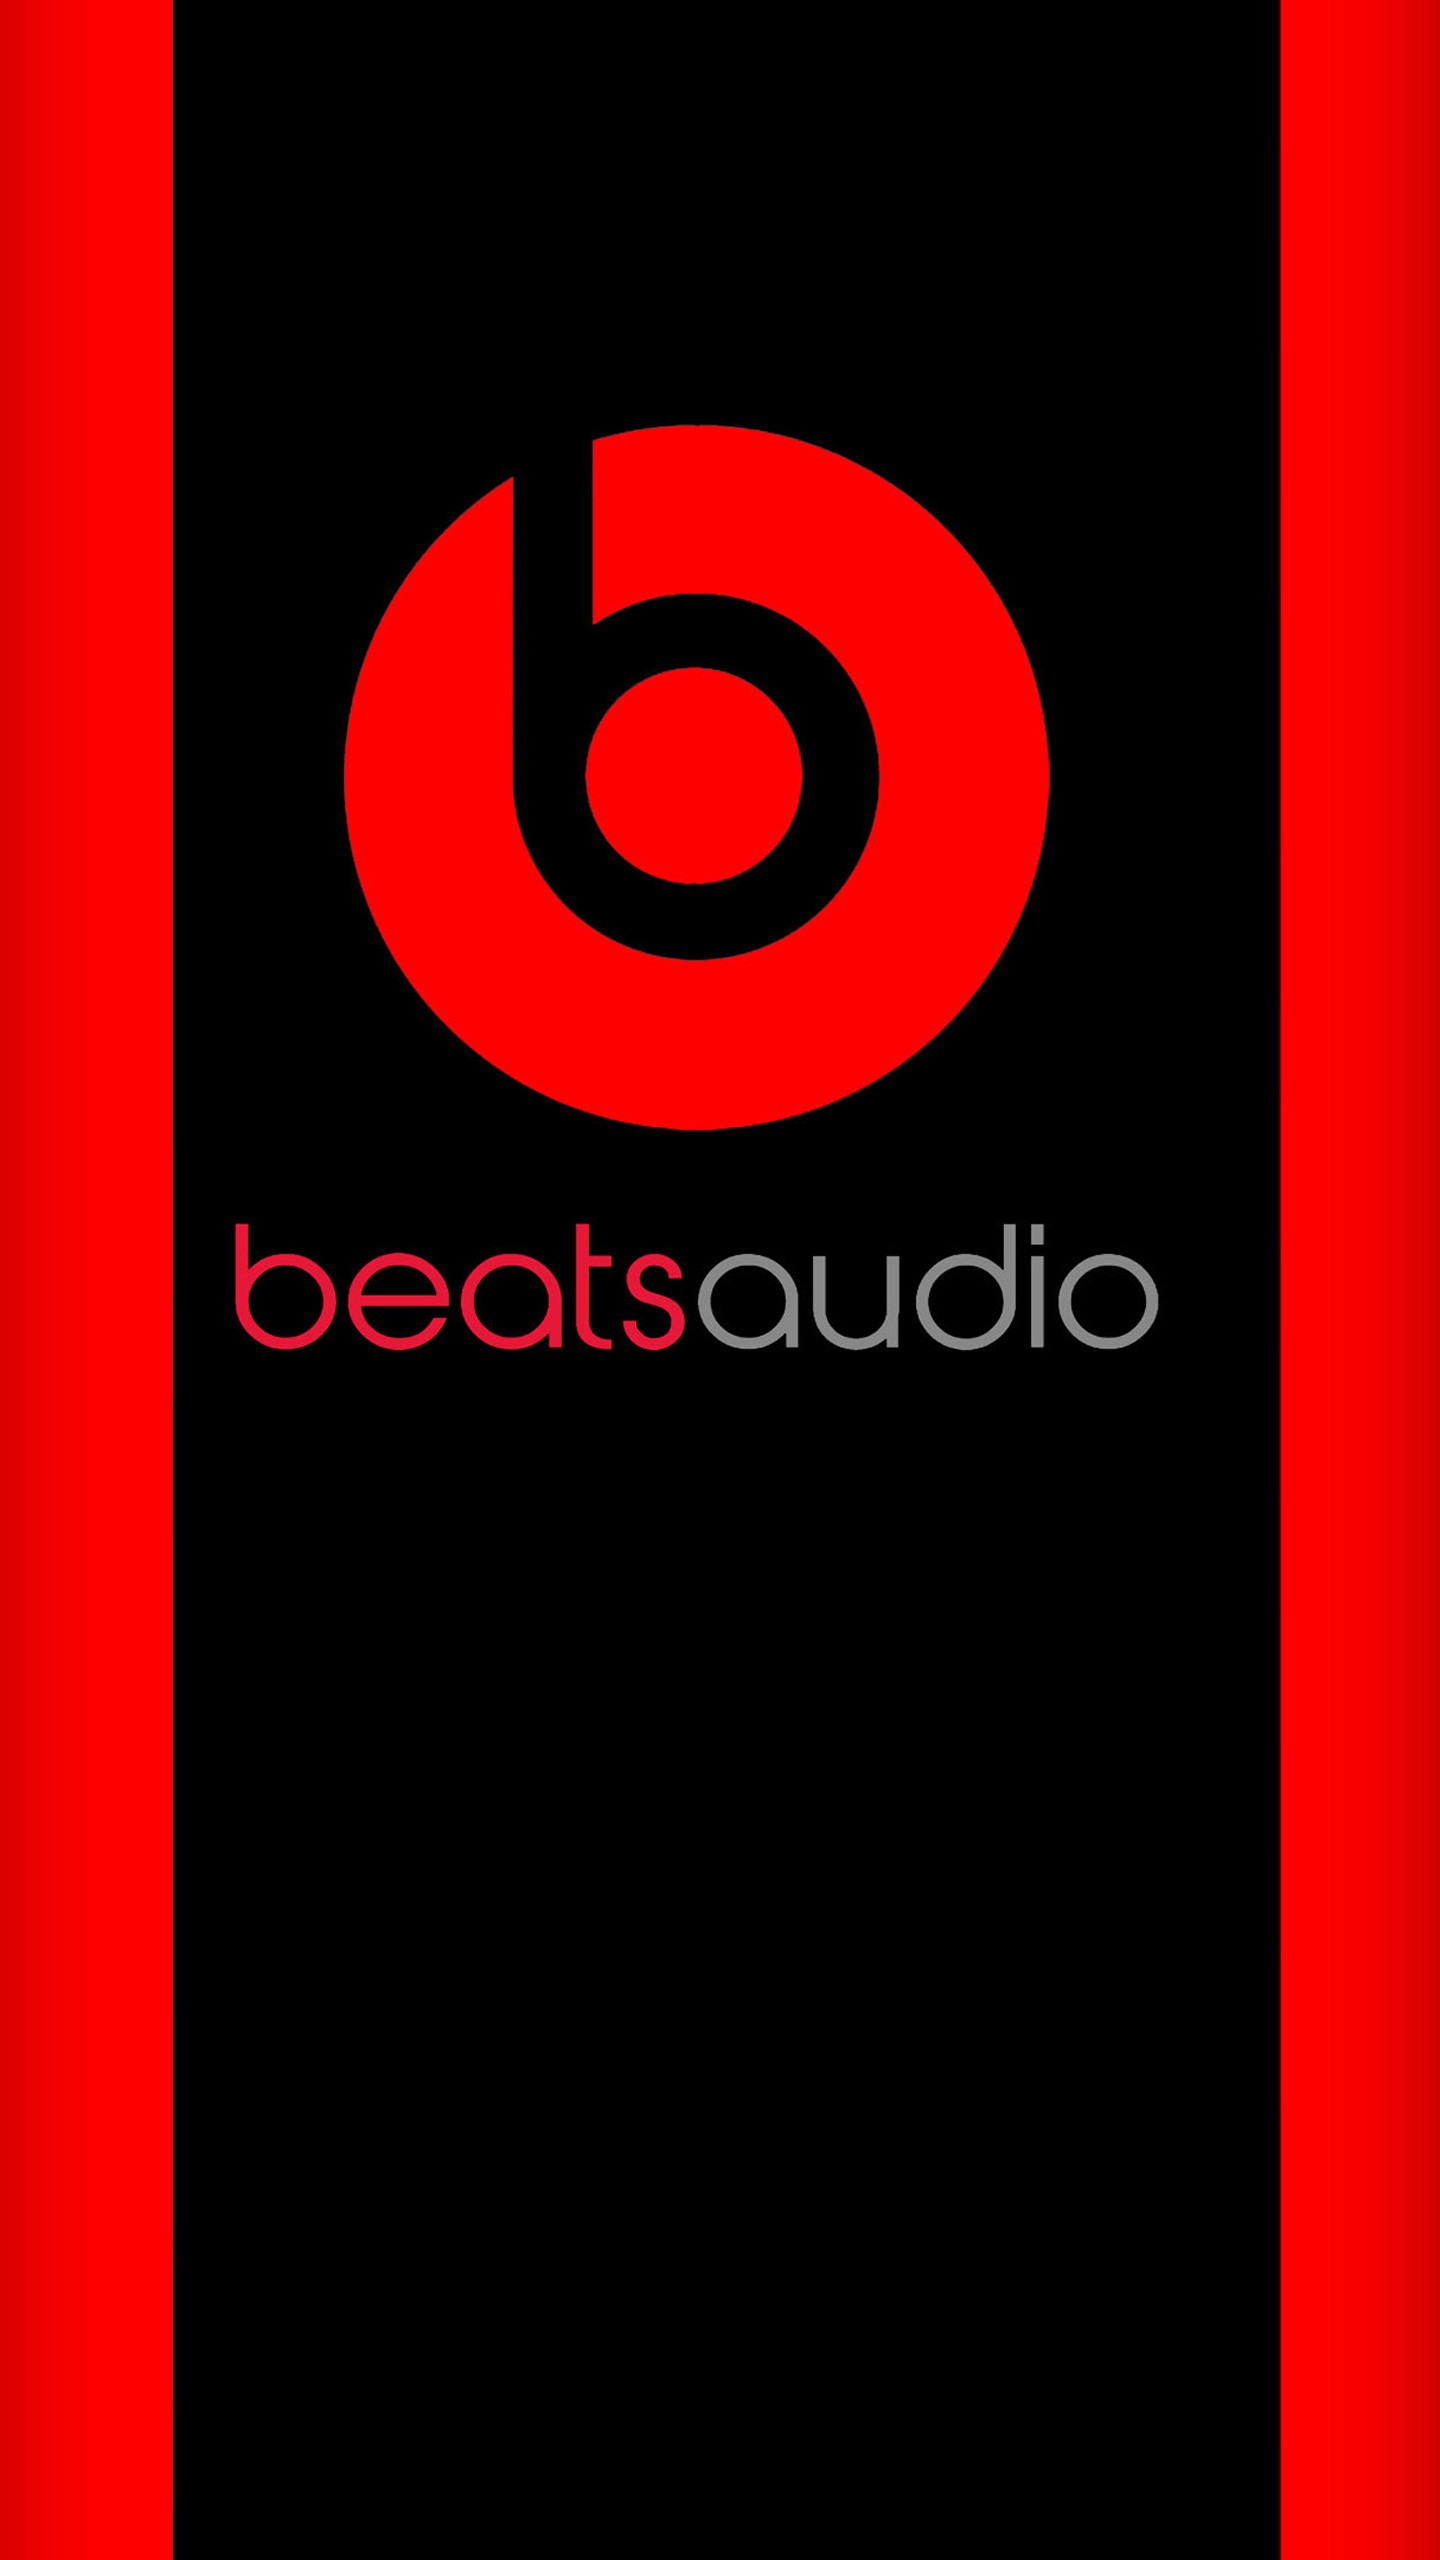 Beats Audio Hd Logo Wallpaper - Beats By Dr Dre - HD Wallpaper 